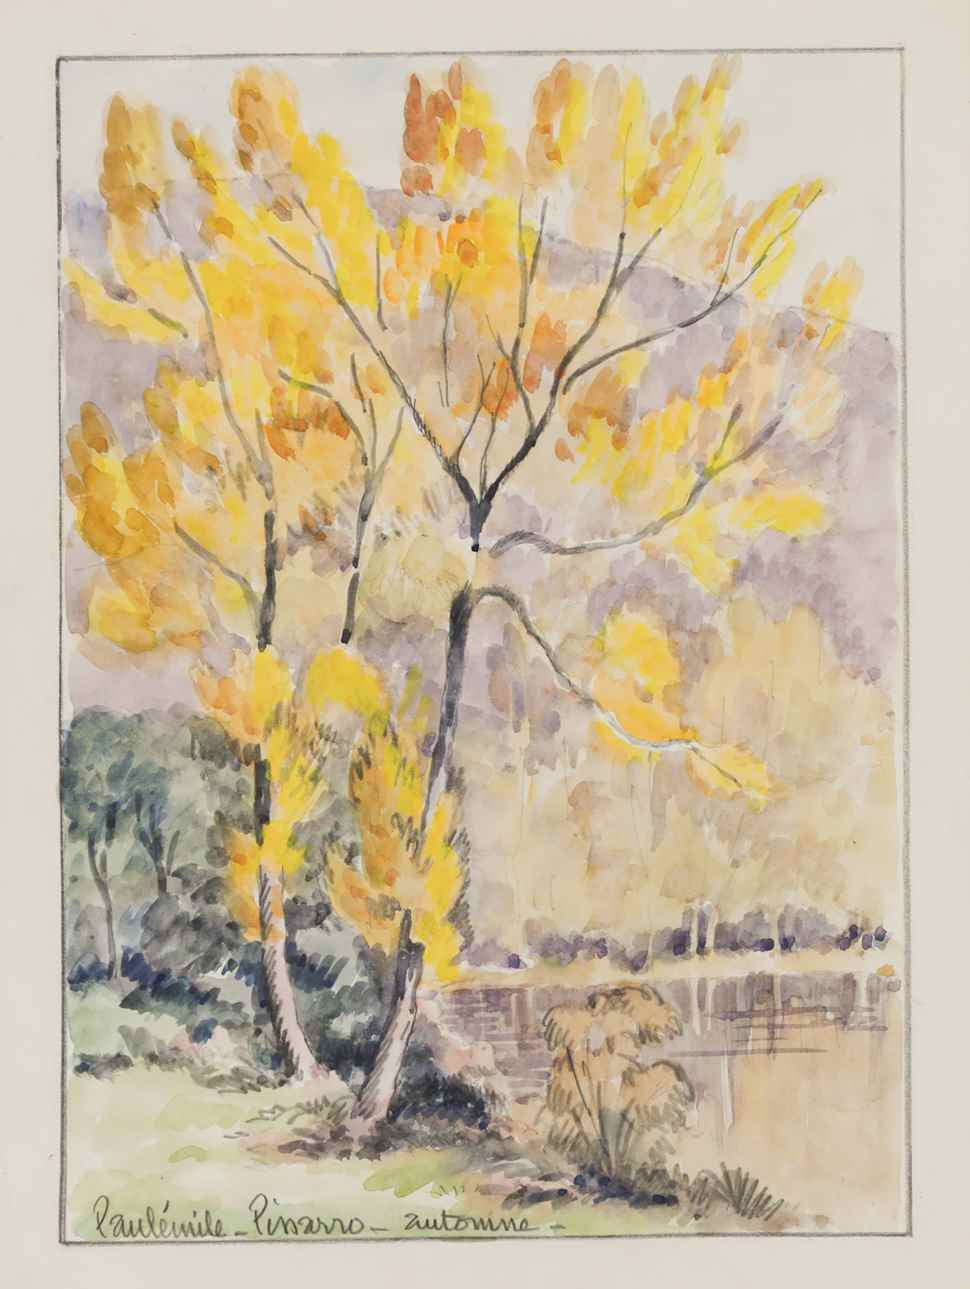 La Suisse Normande en Automne - Paulémile Pissarro (1884 - 1972)